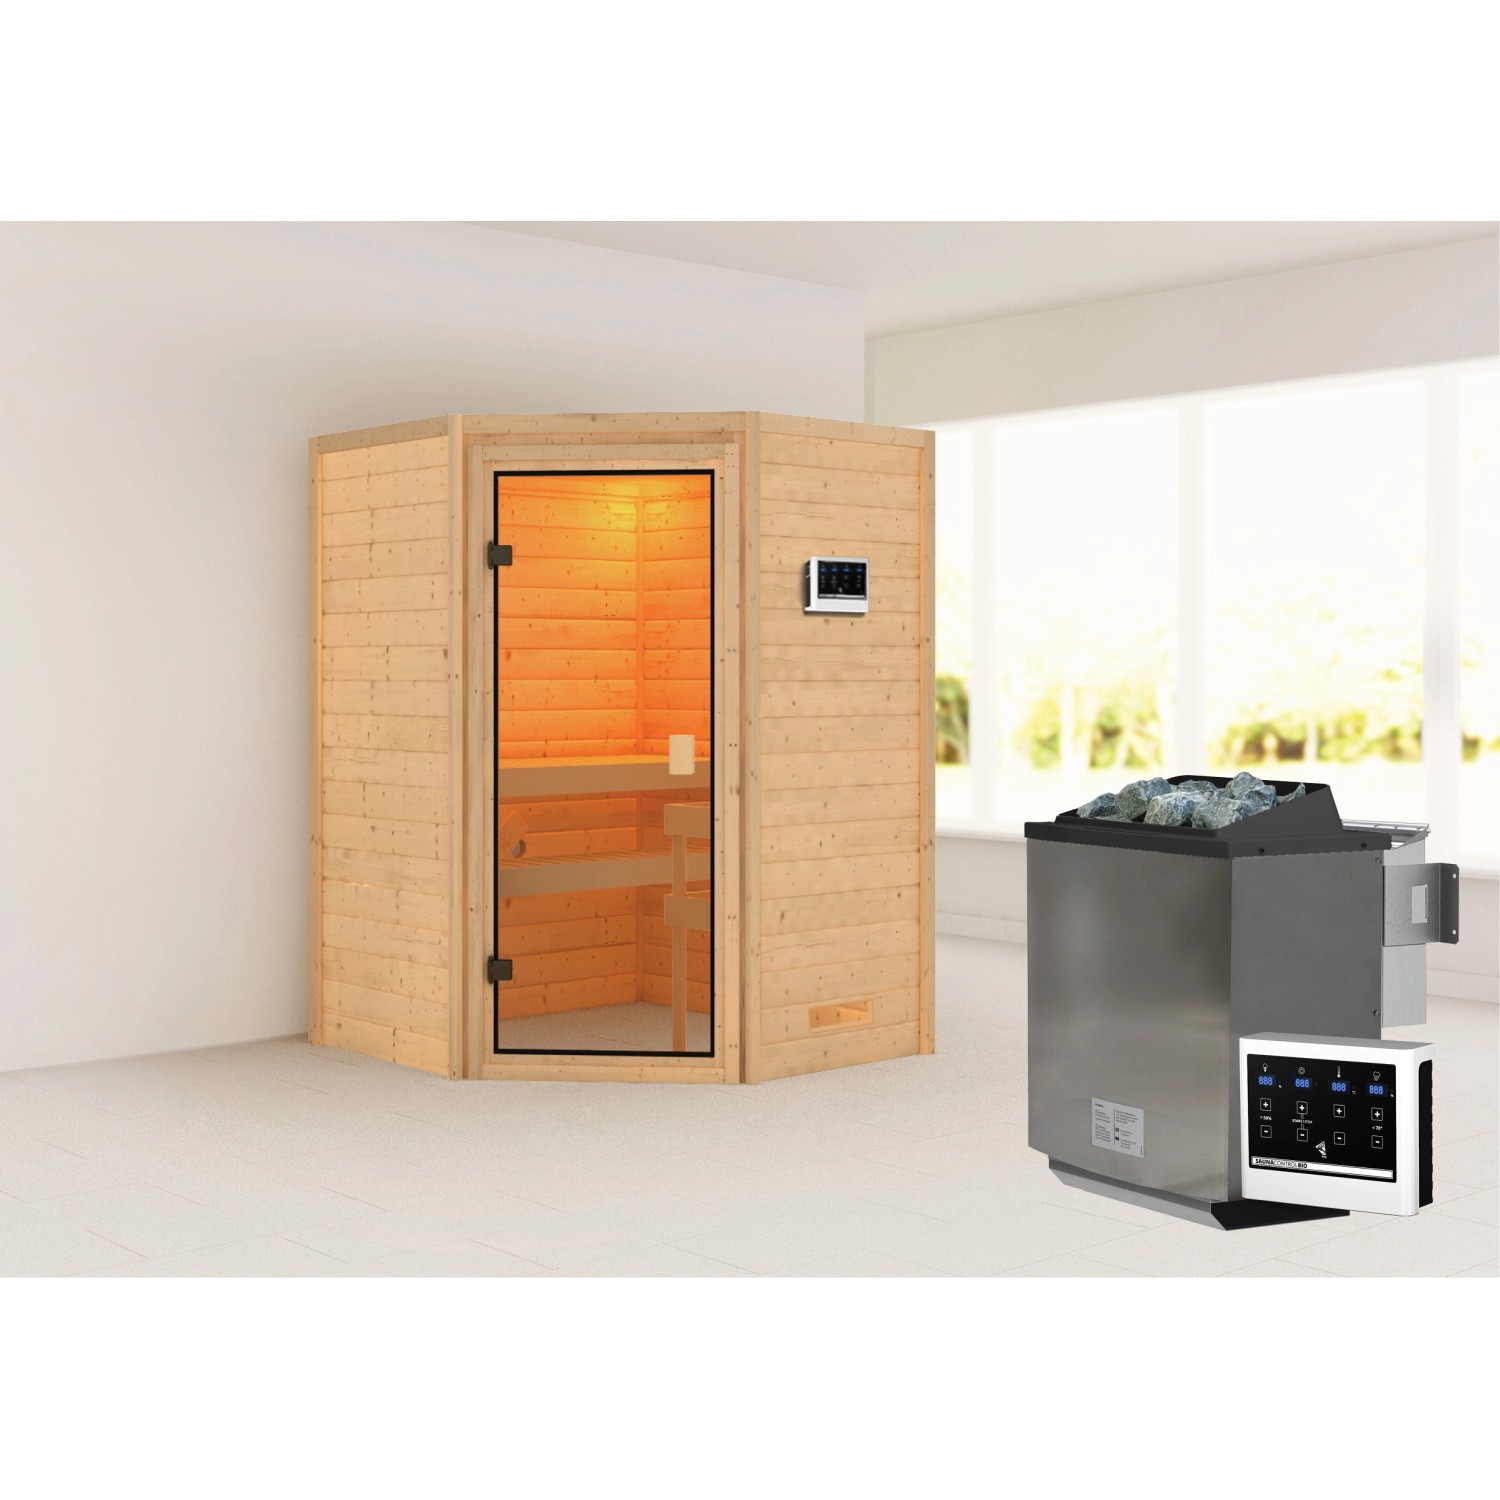 Woodfeeling Sauna Antonia inkl. 9 kW Bio-Ofen mit ext. Strg. Glastür von Woodfeeling